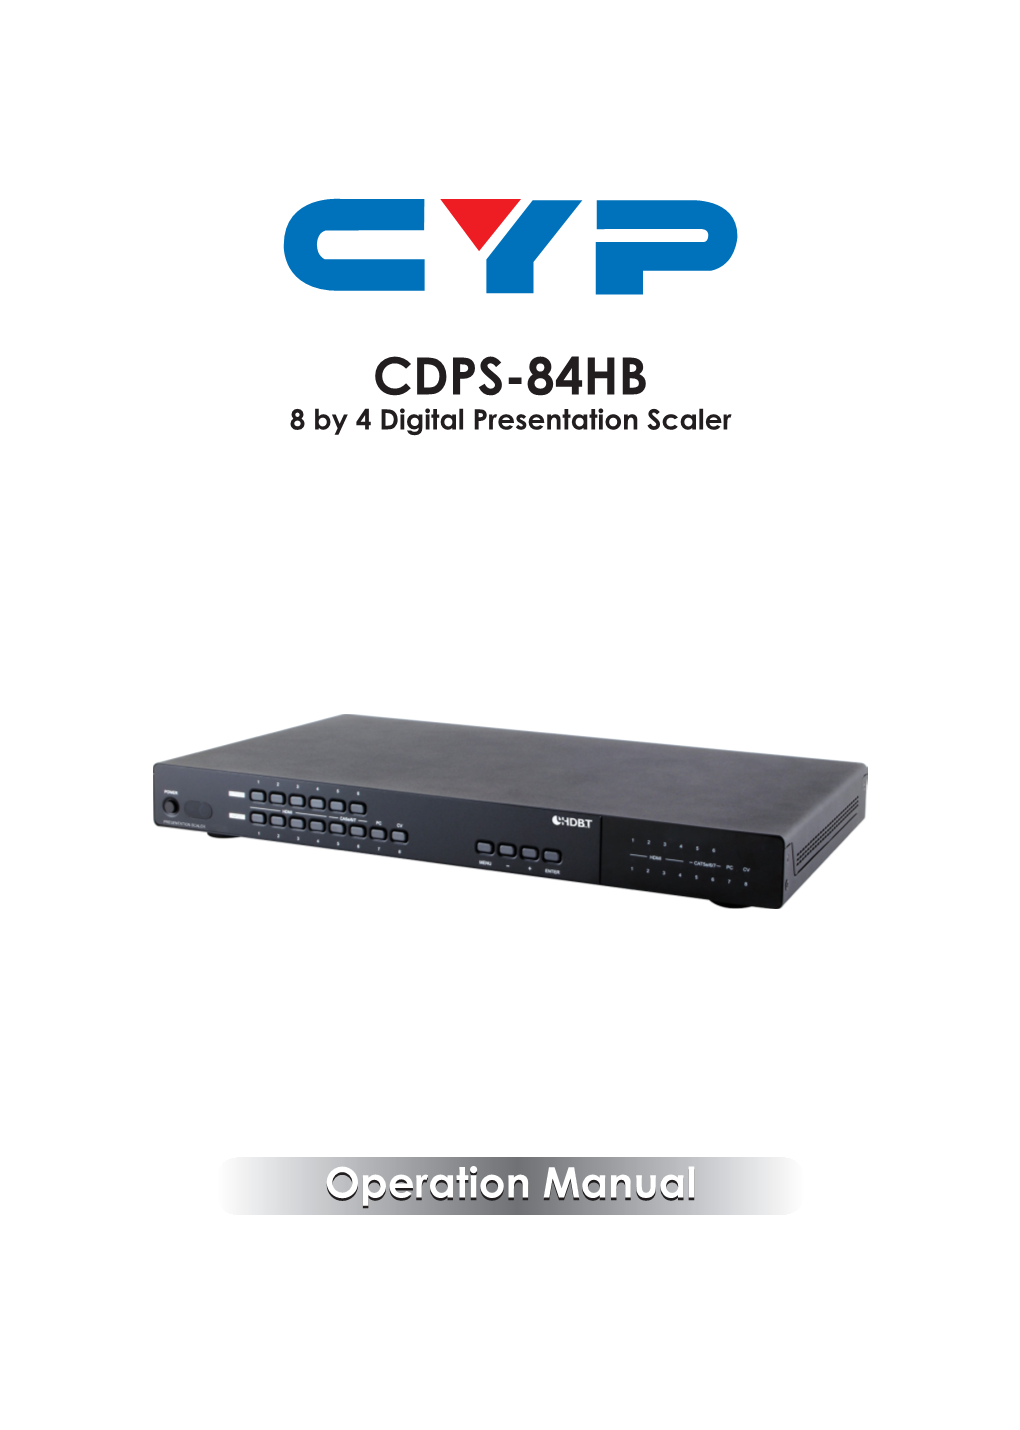 CDPS-84HB 8 by 4 Digital Presentation Scaler